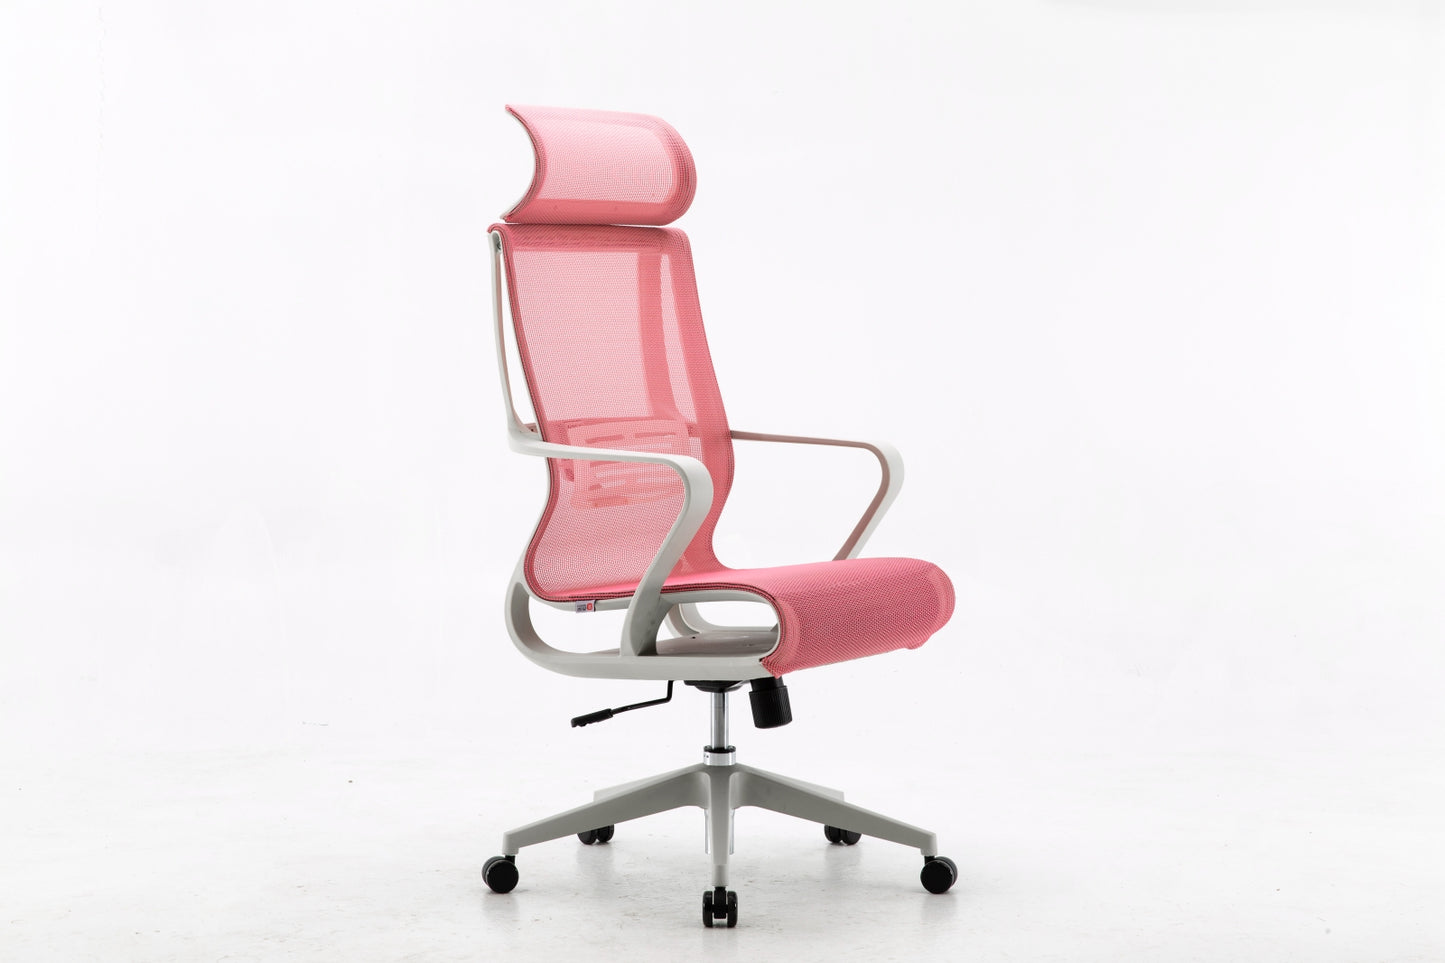 Sihoo M60 Ergonomic Chair (Pink)